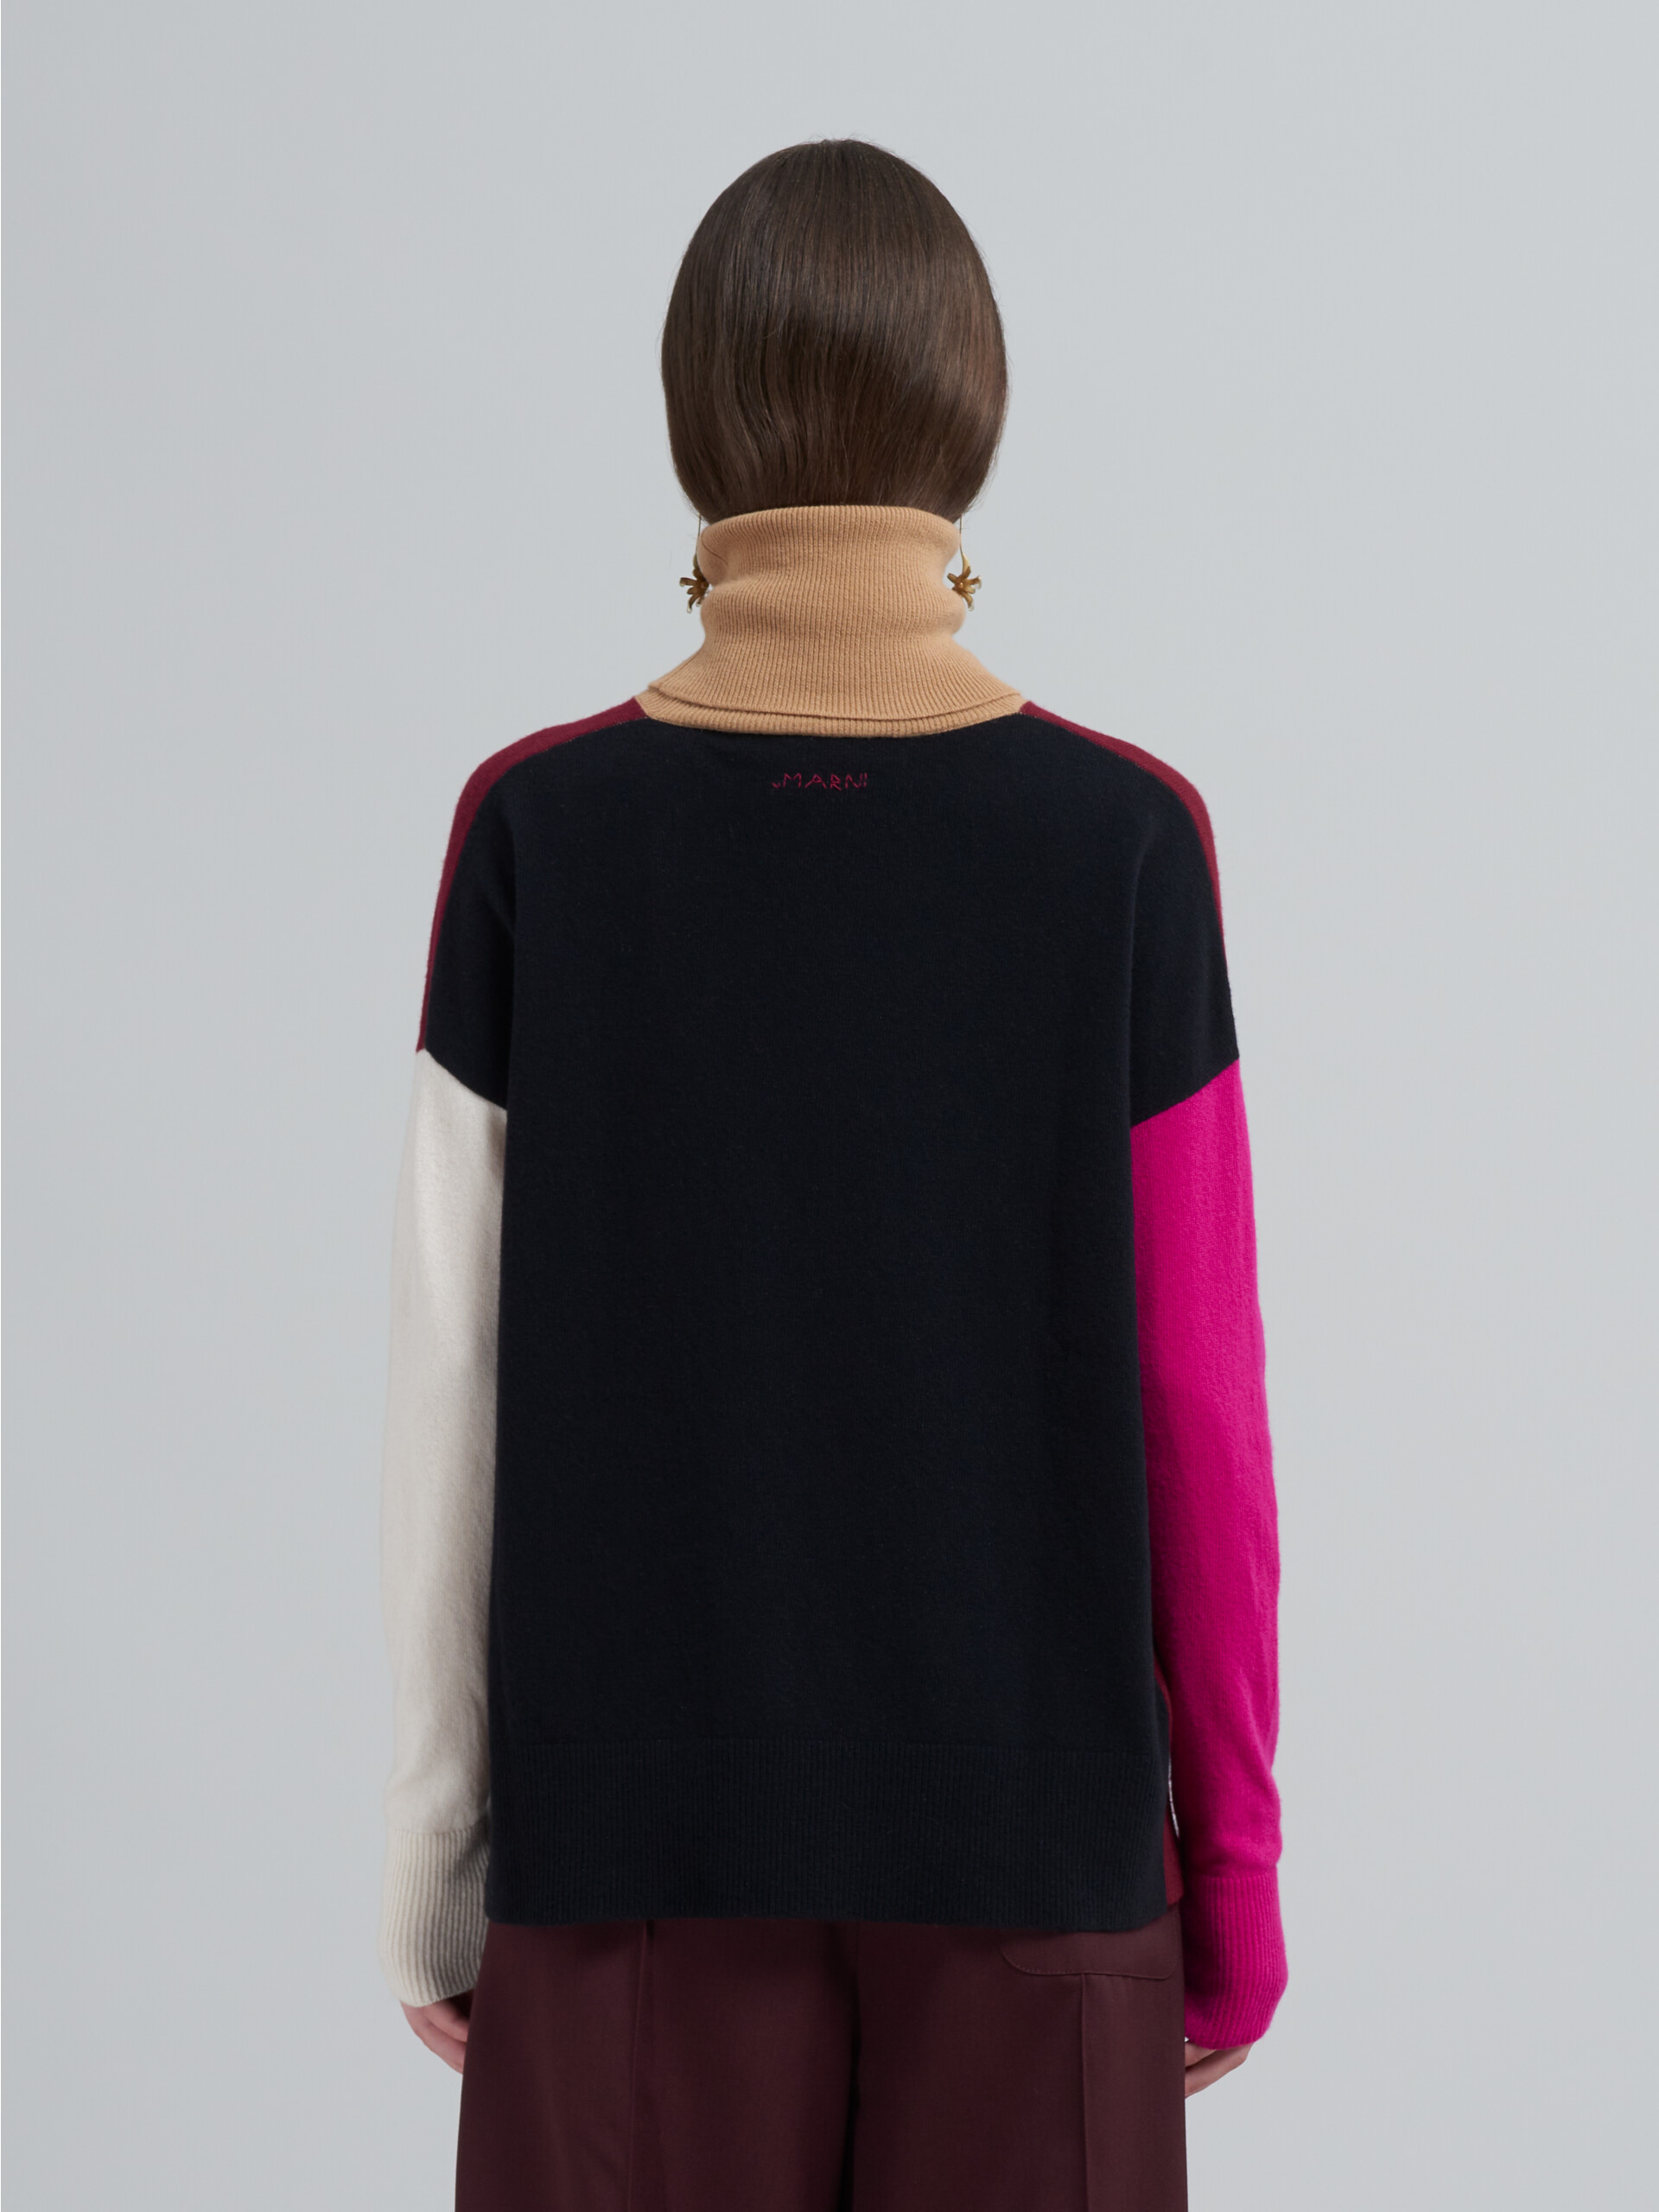 Cashwool turtleneck sweater - Pullovers - Image 3